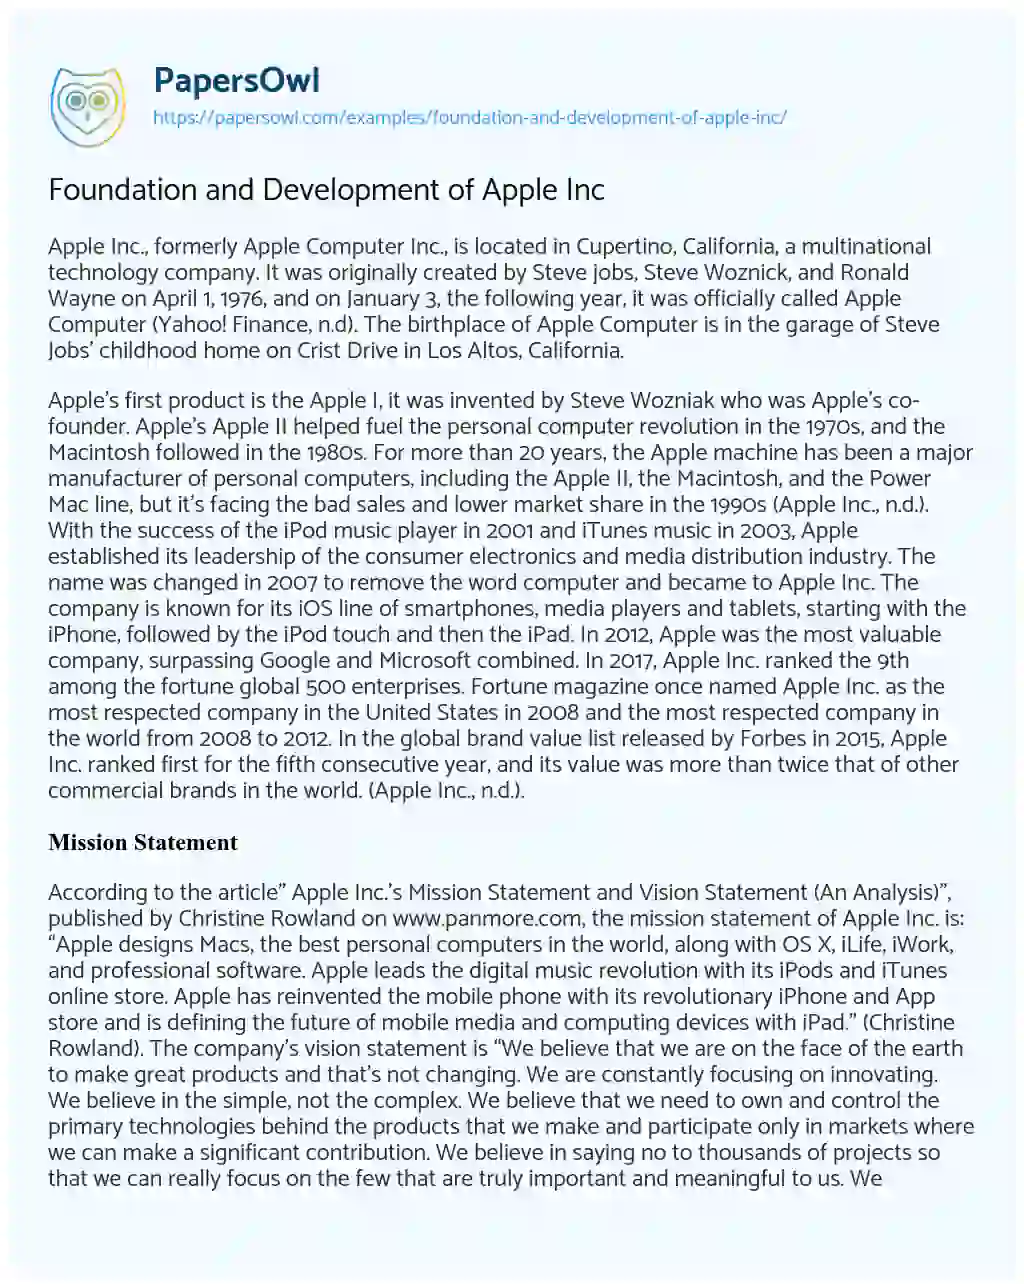 Essay on Foundation and Development of Apple Inc